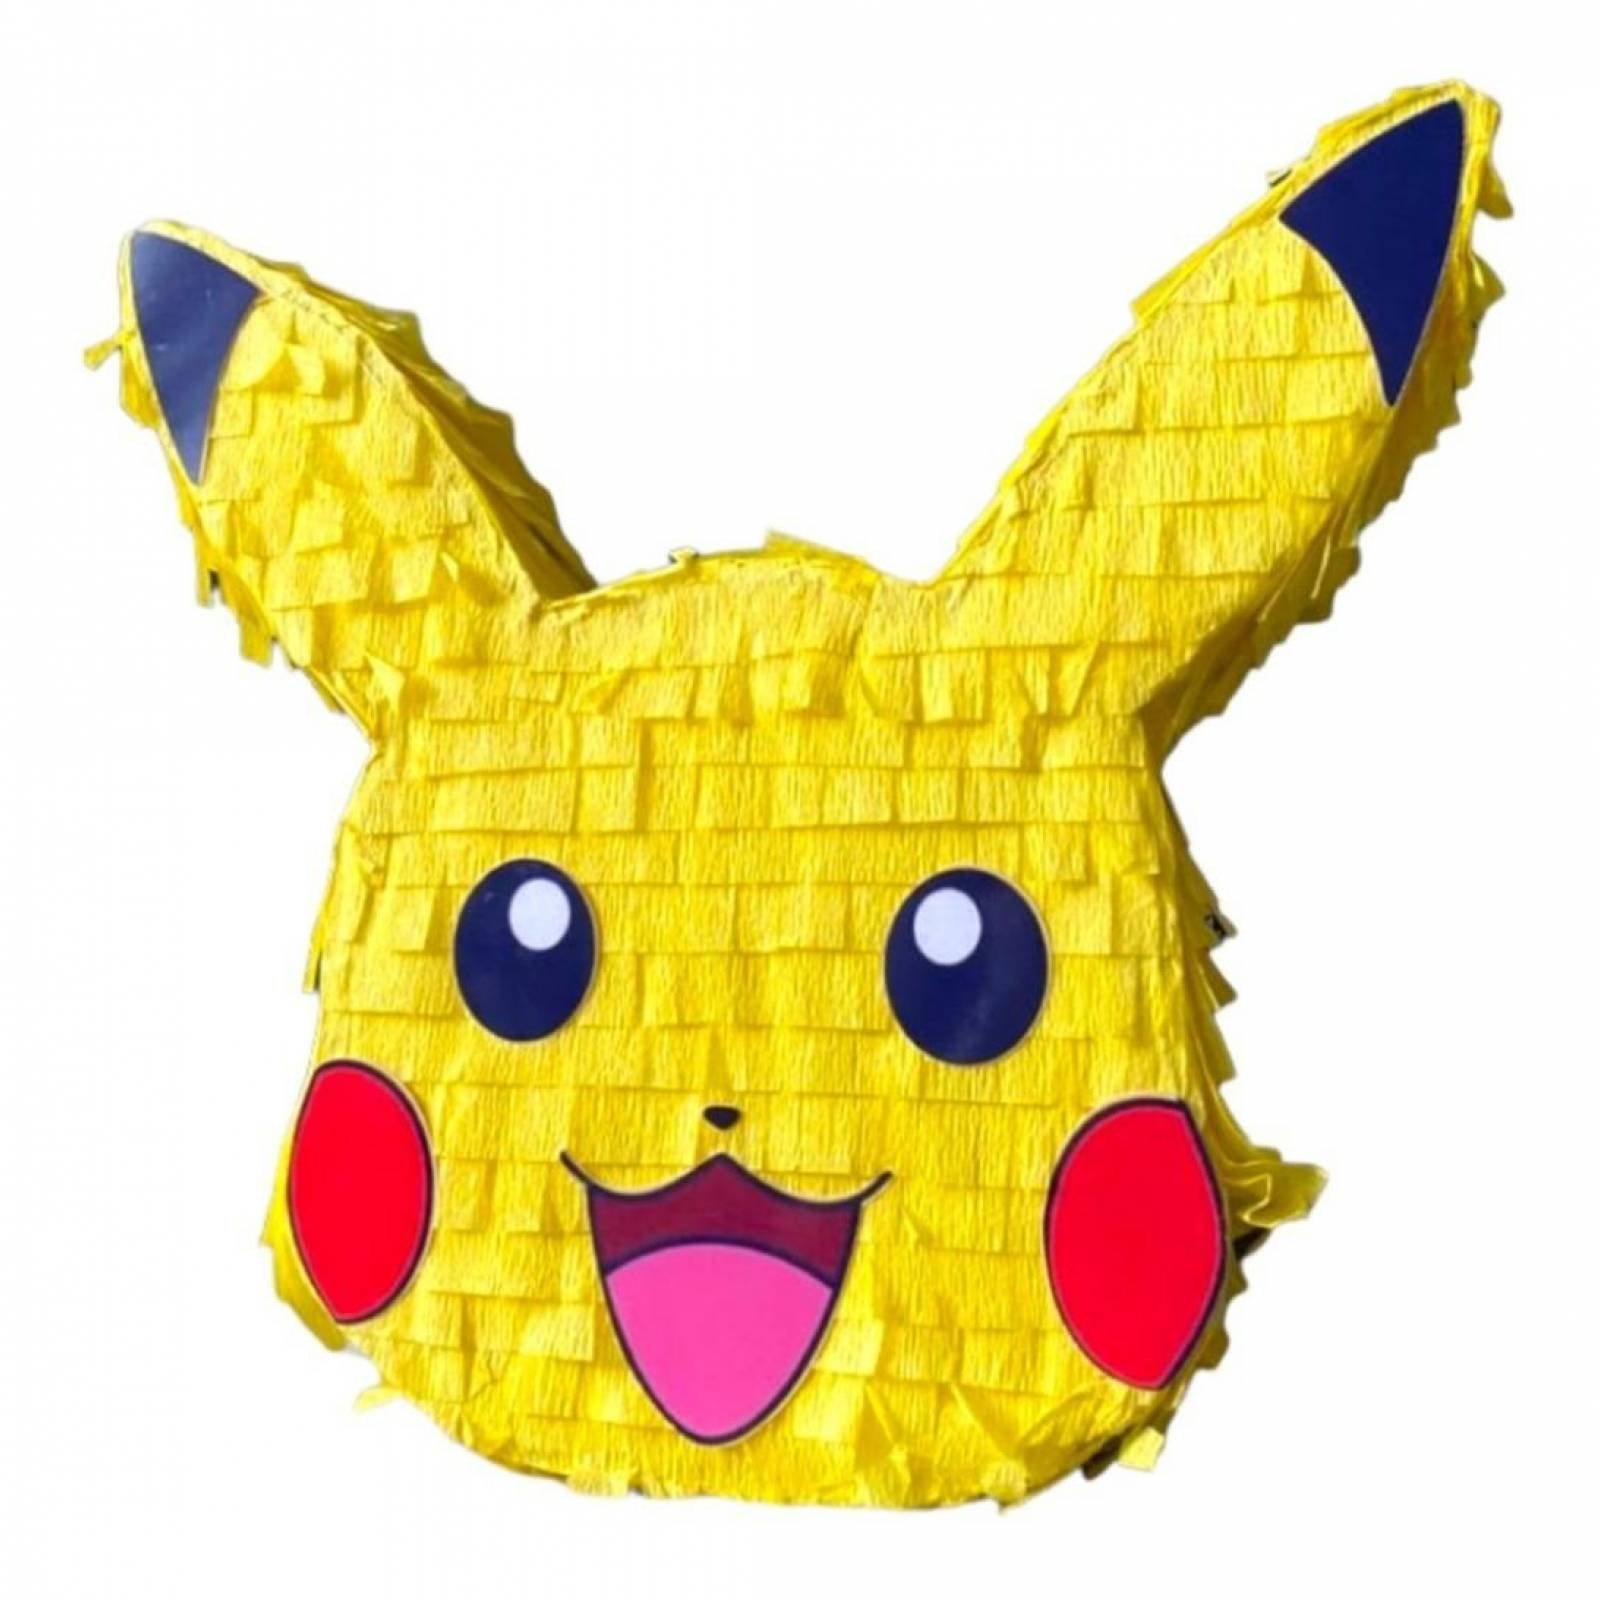 Piñata Pikachu, Pokemon #piñatasTipoi #piñata #pikachu #pokemon